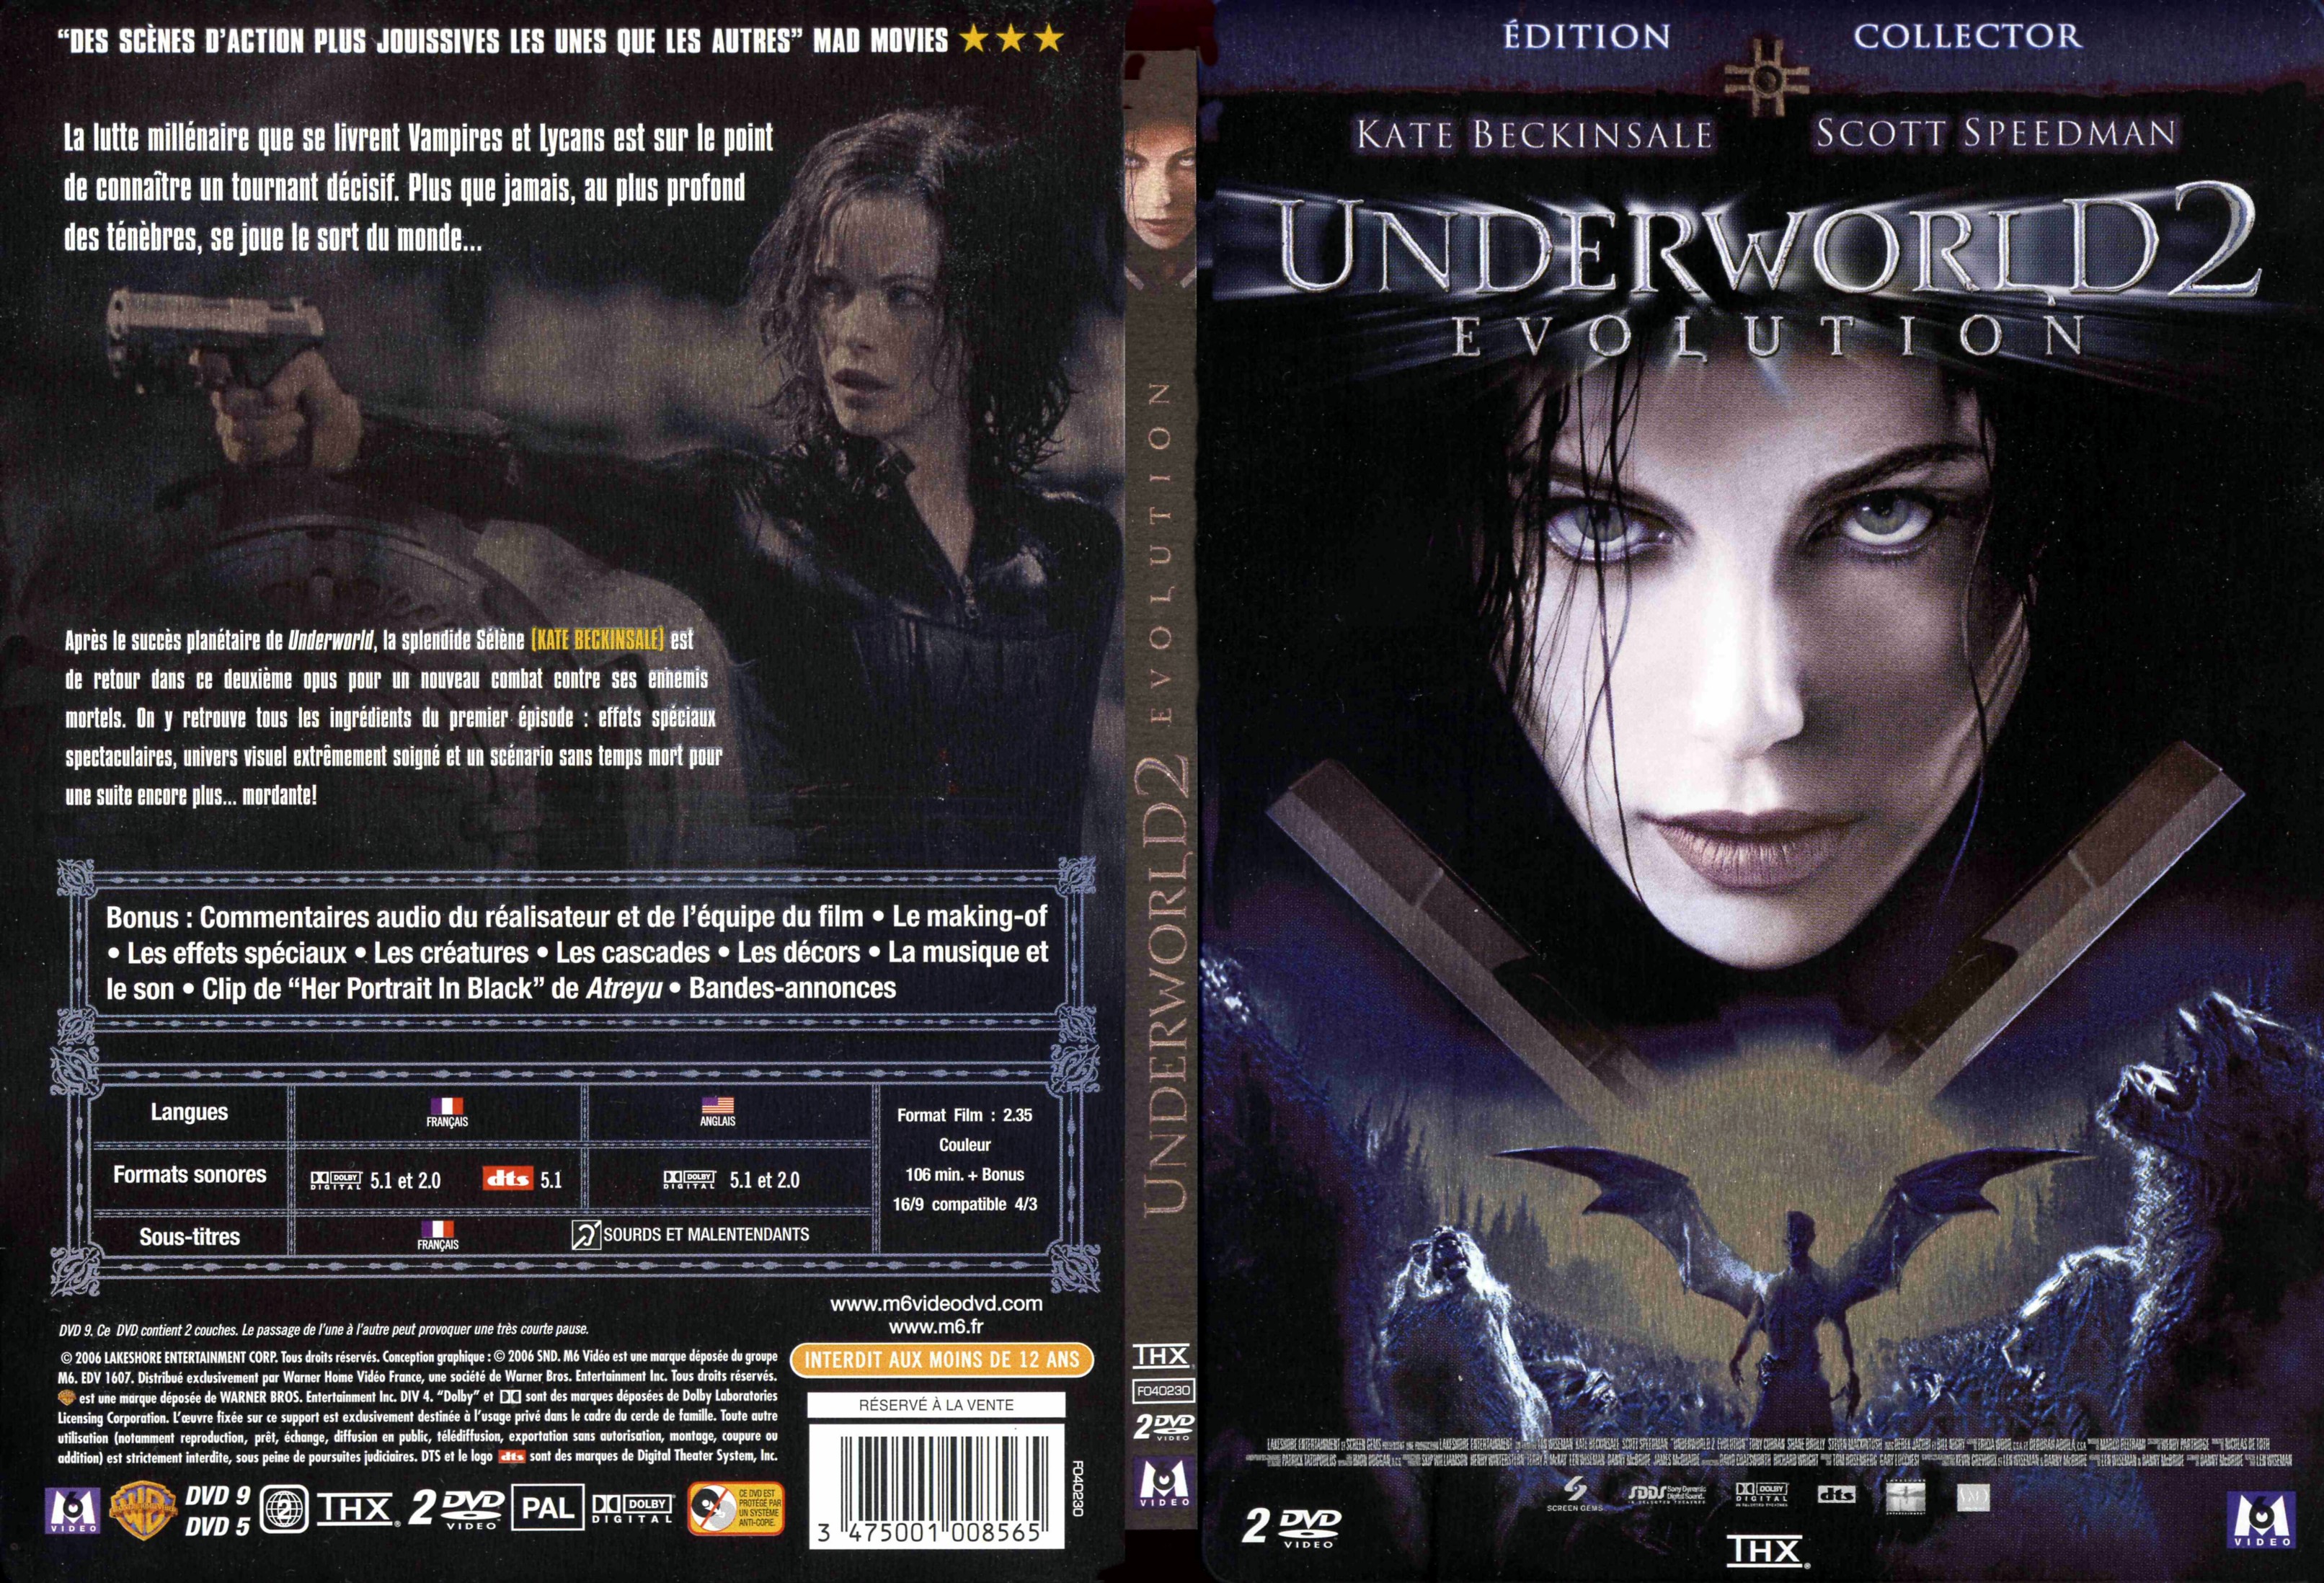 Jaquette DVD Underworld evolution v2